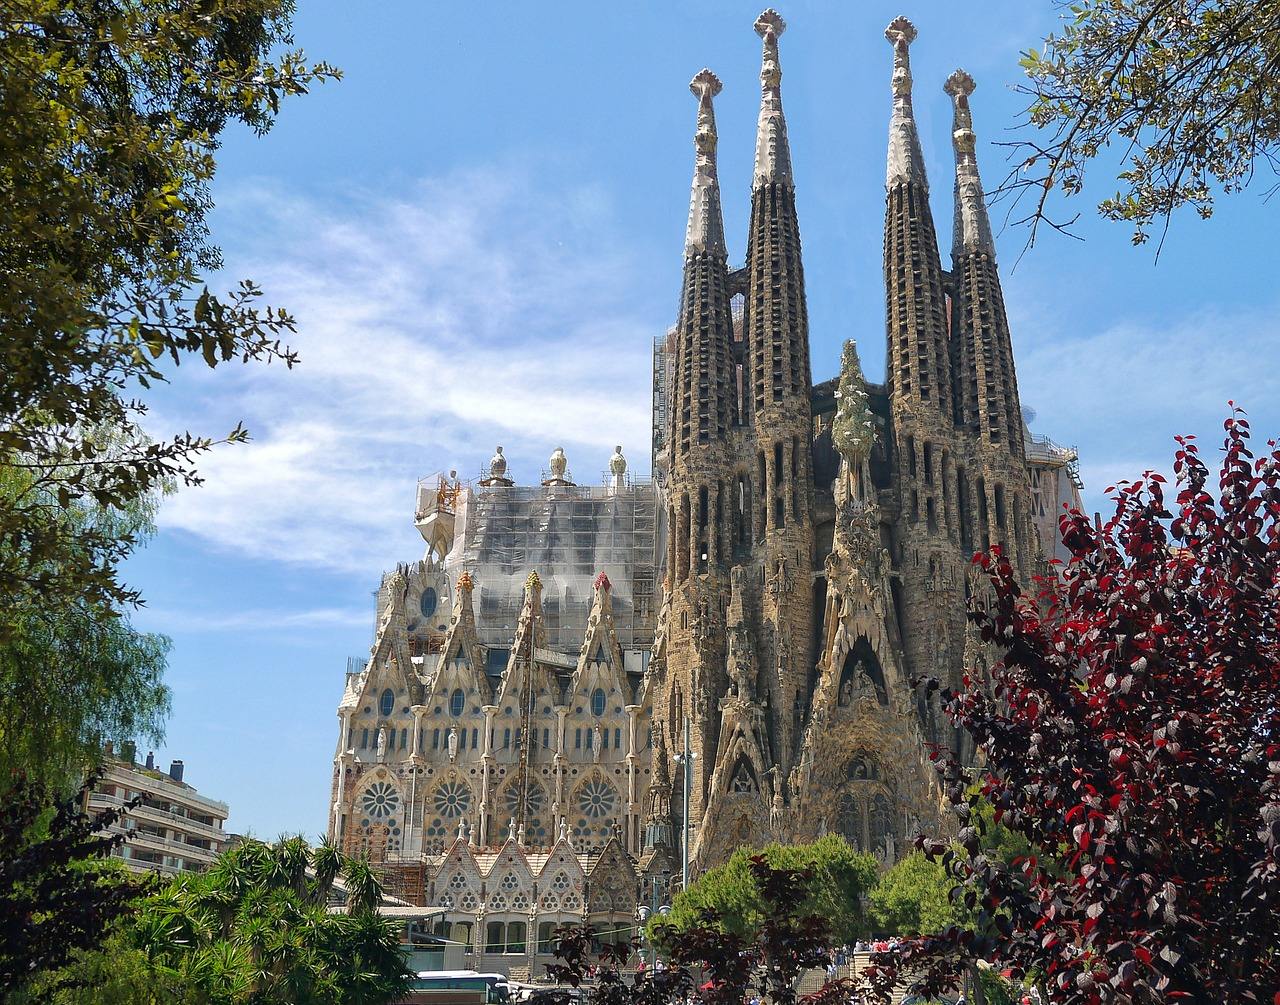 Sagrada Familia by Antoni Gaudí in Barcelona, Spain